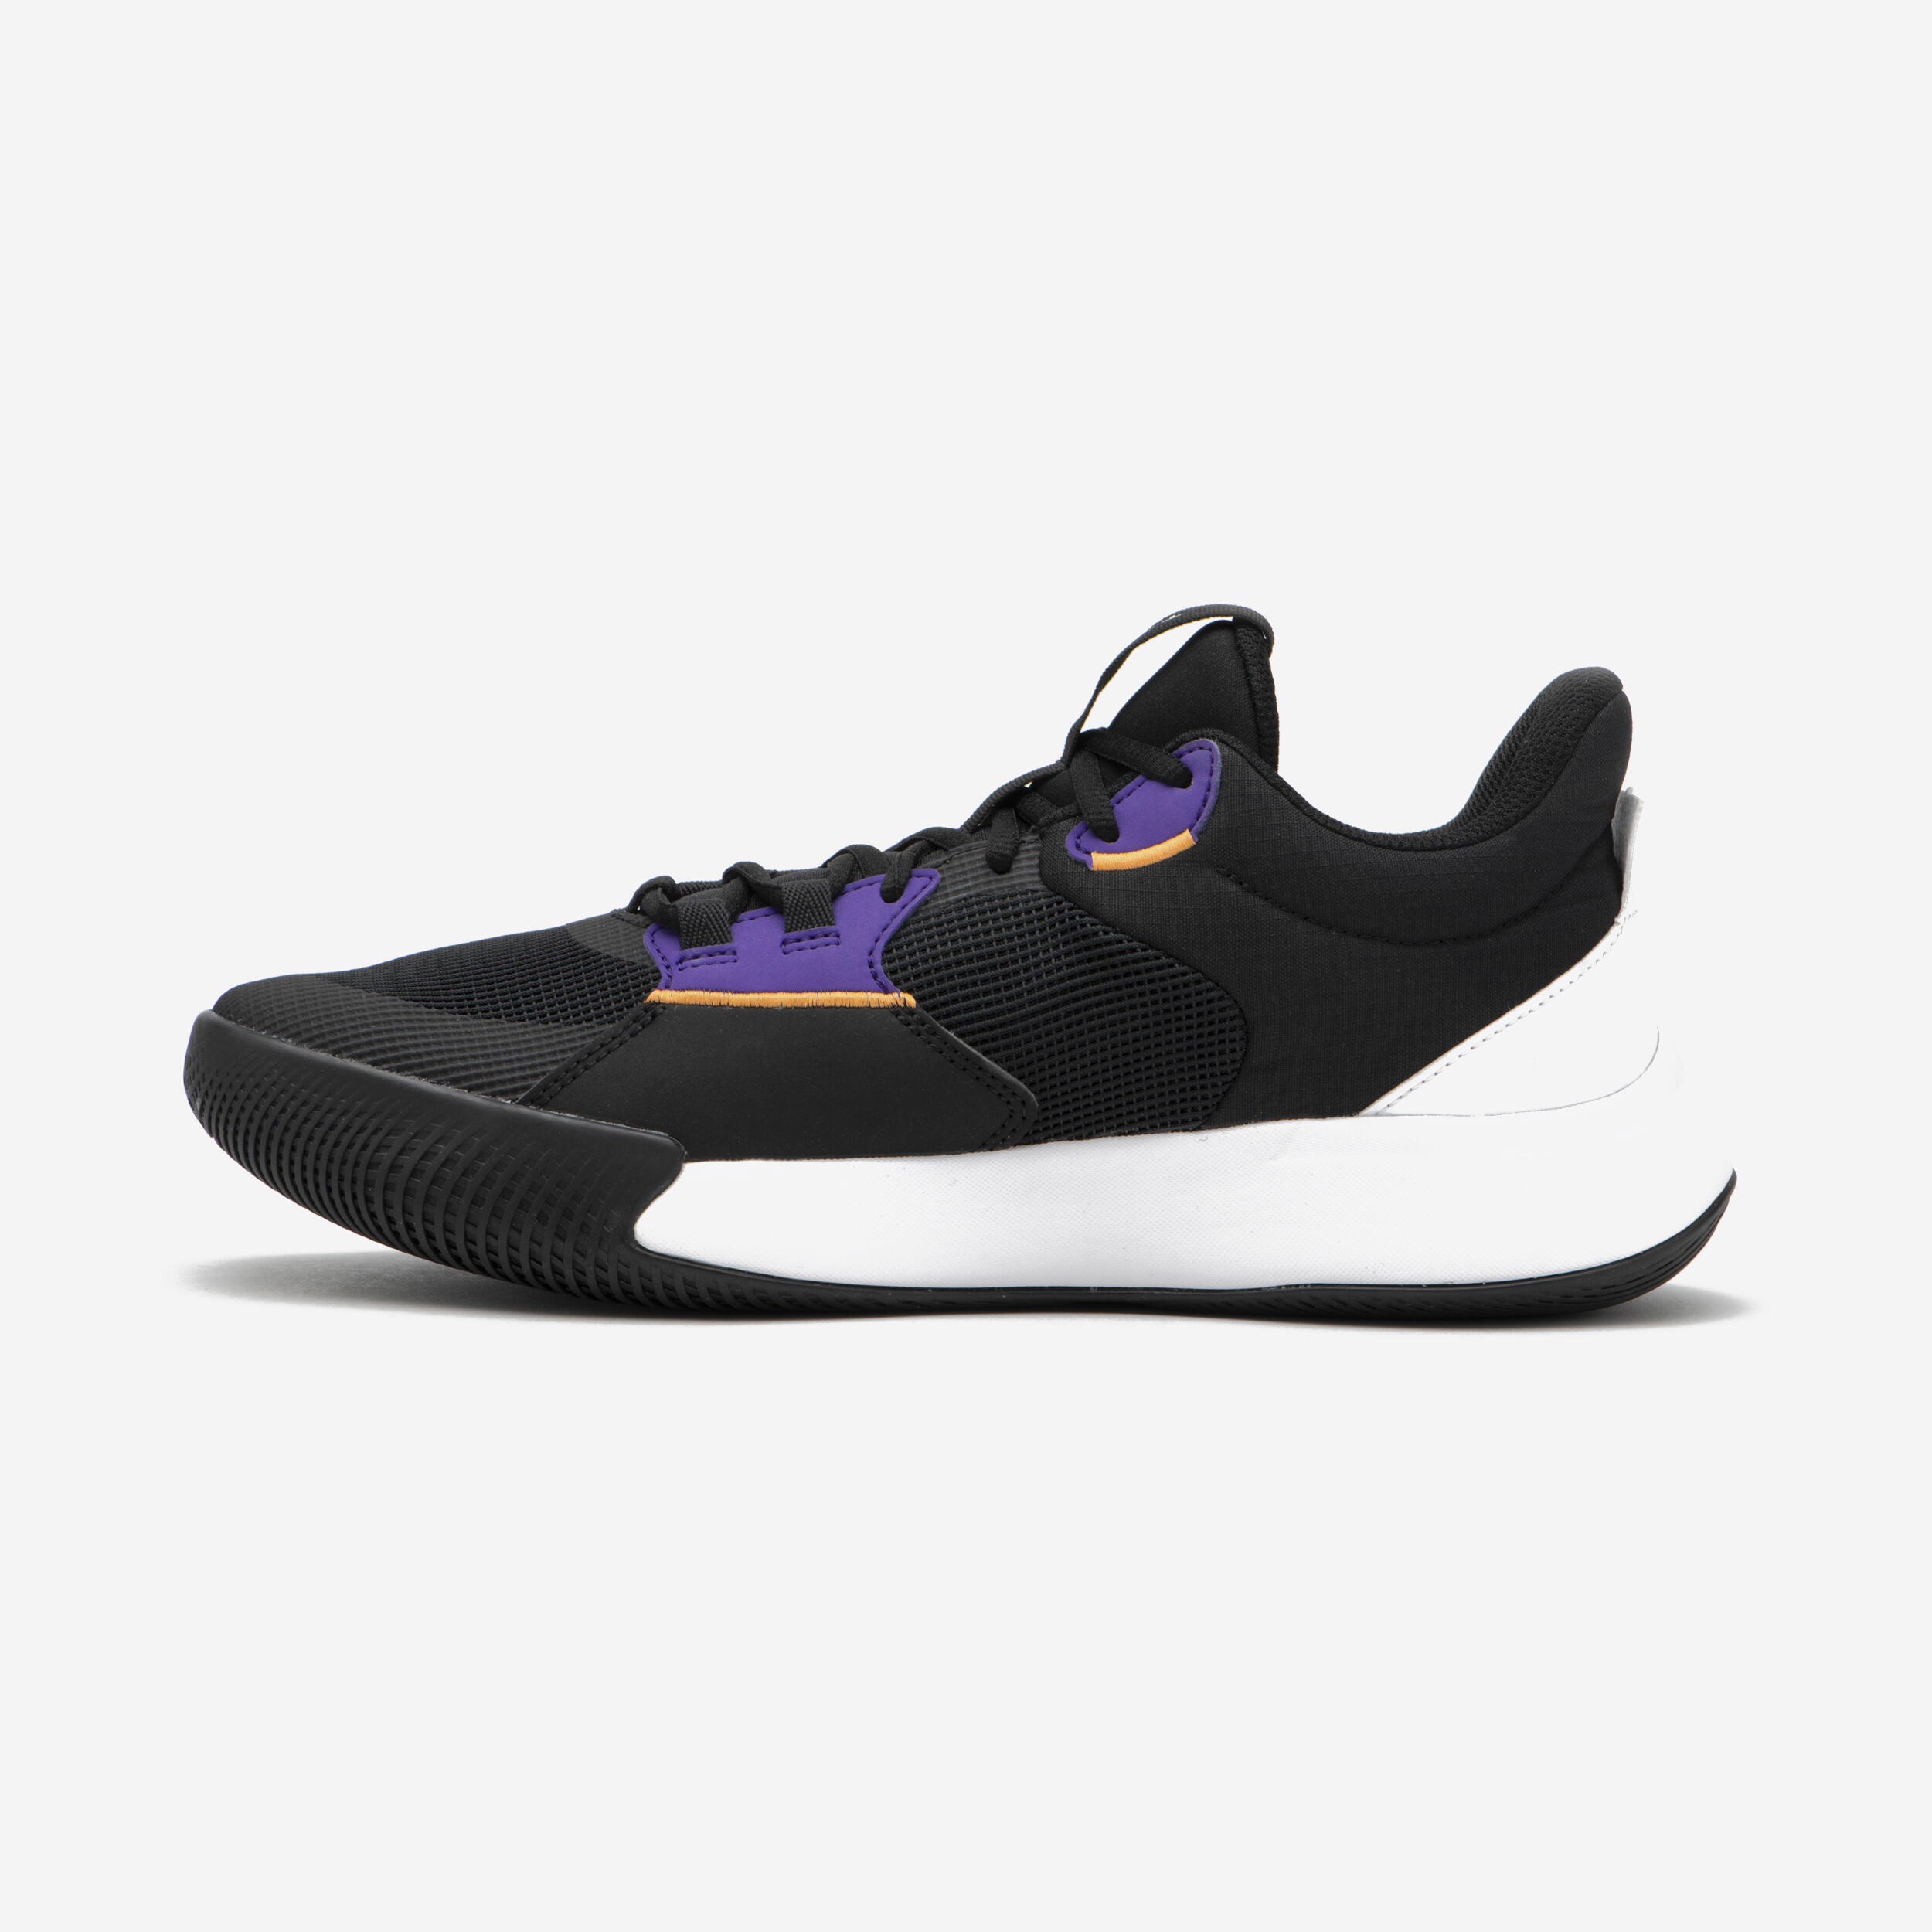 Men's/Women's Basketball Shoes Fast 500 Low - Black 3/8